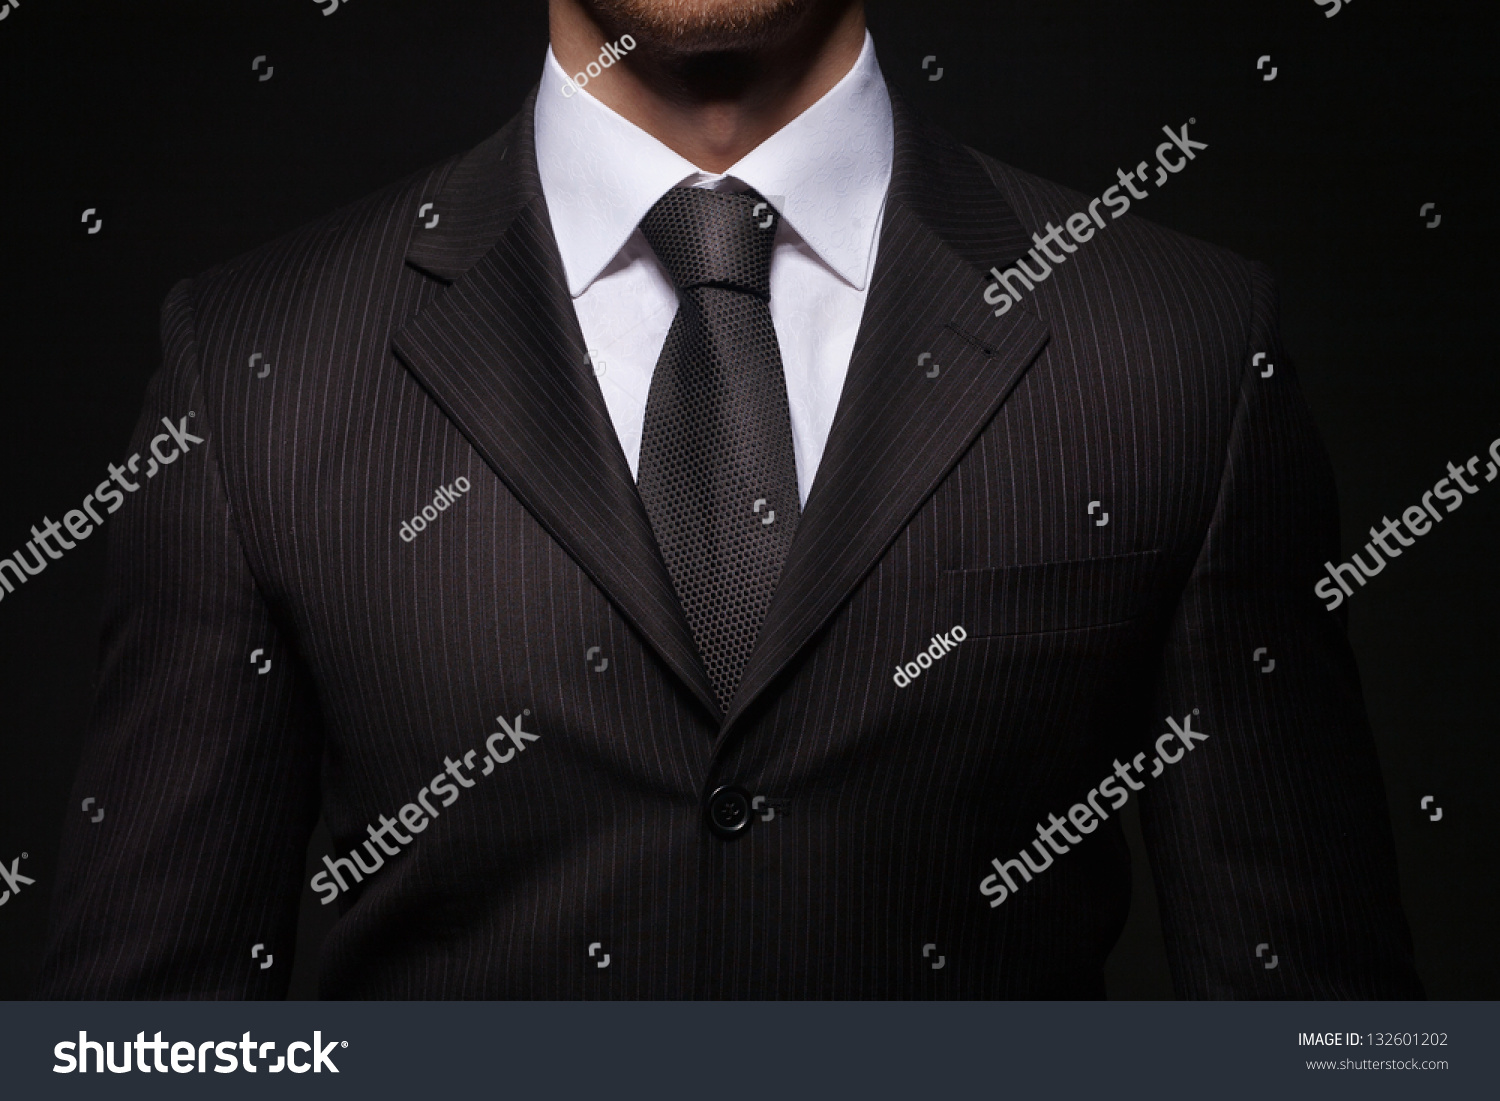 Closeup Shoot Businessman On Dark Background Stock Photo 132601202 ...